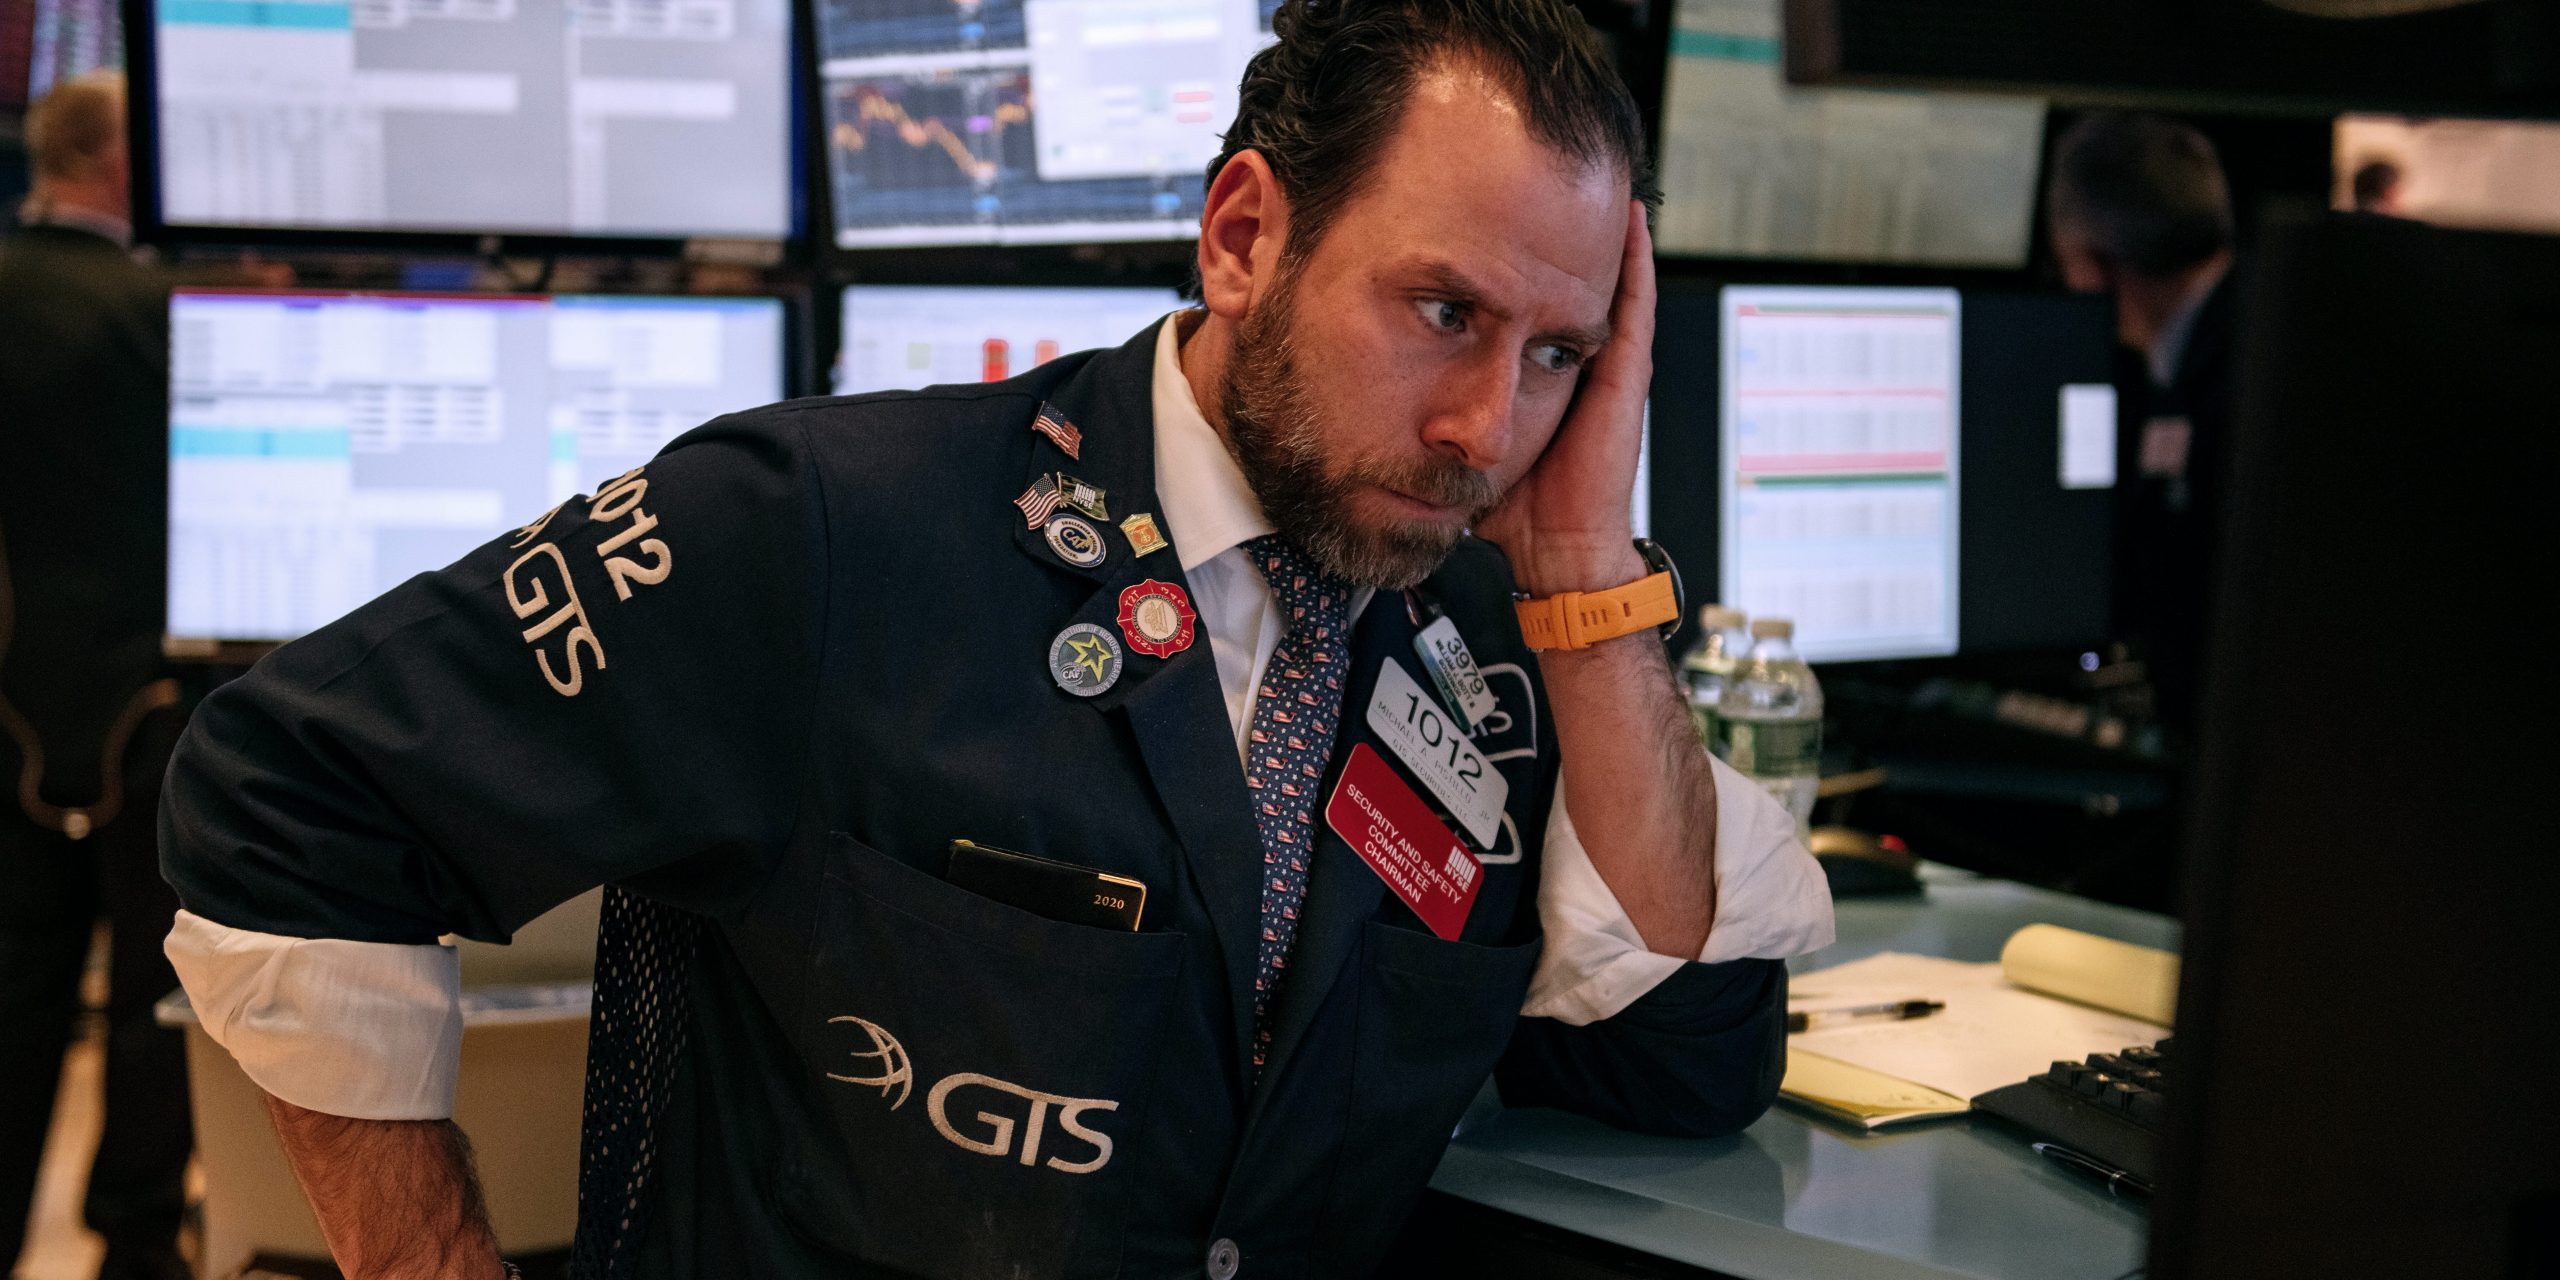 Stock trader New York Wall Street